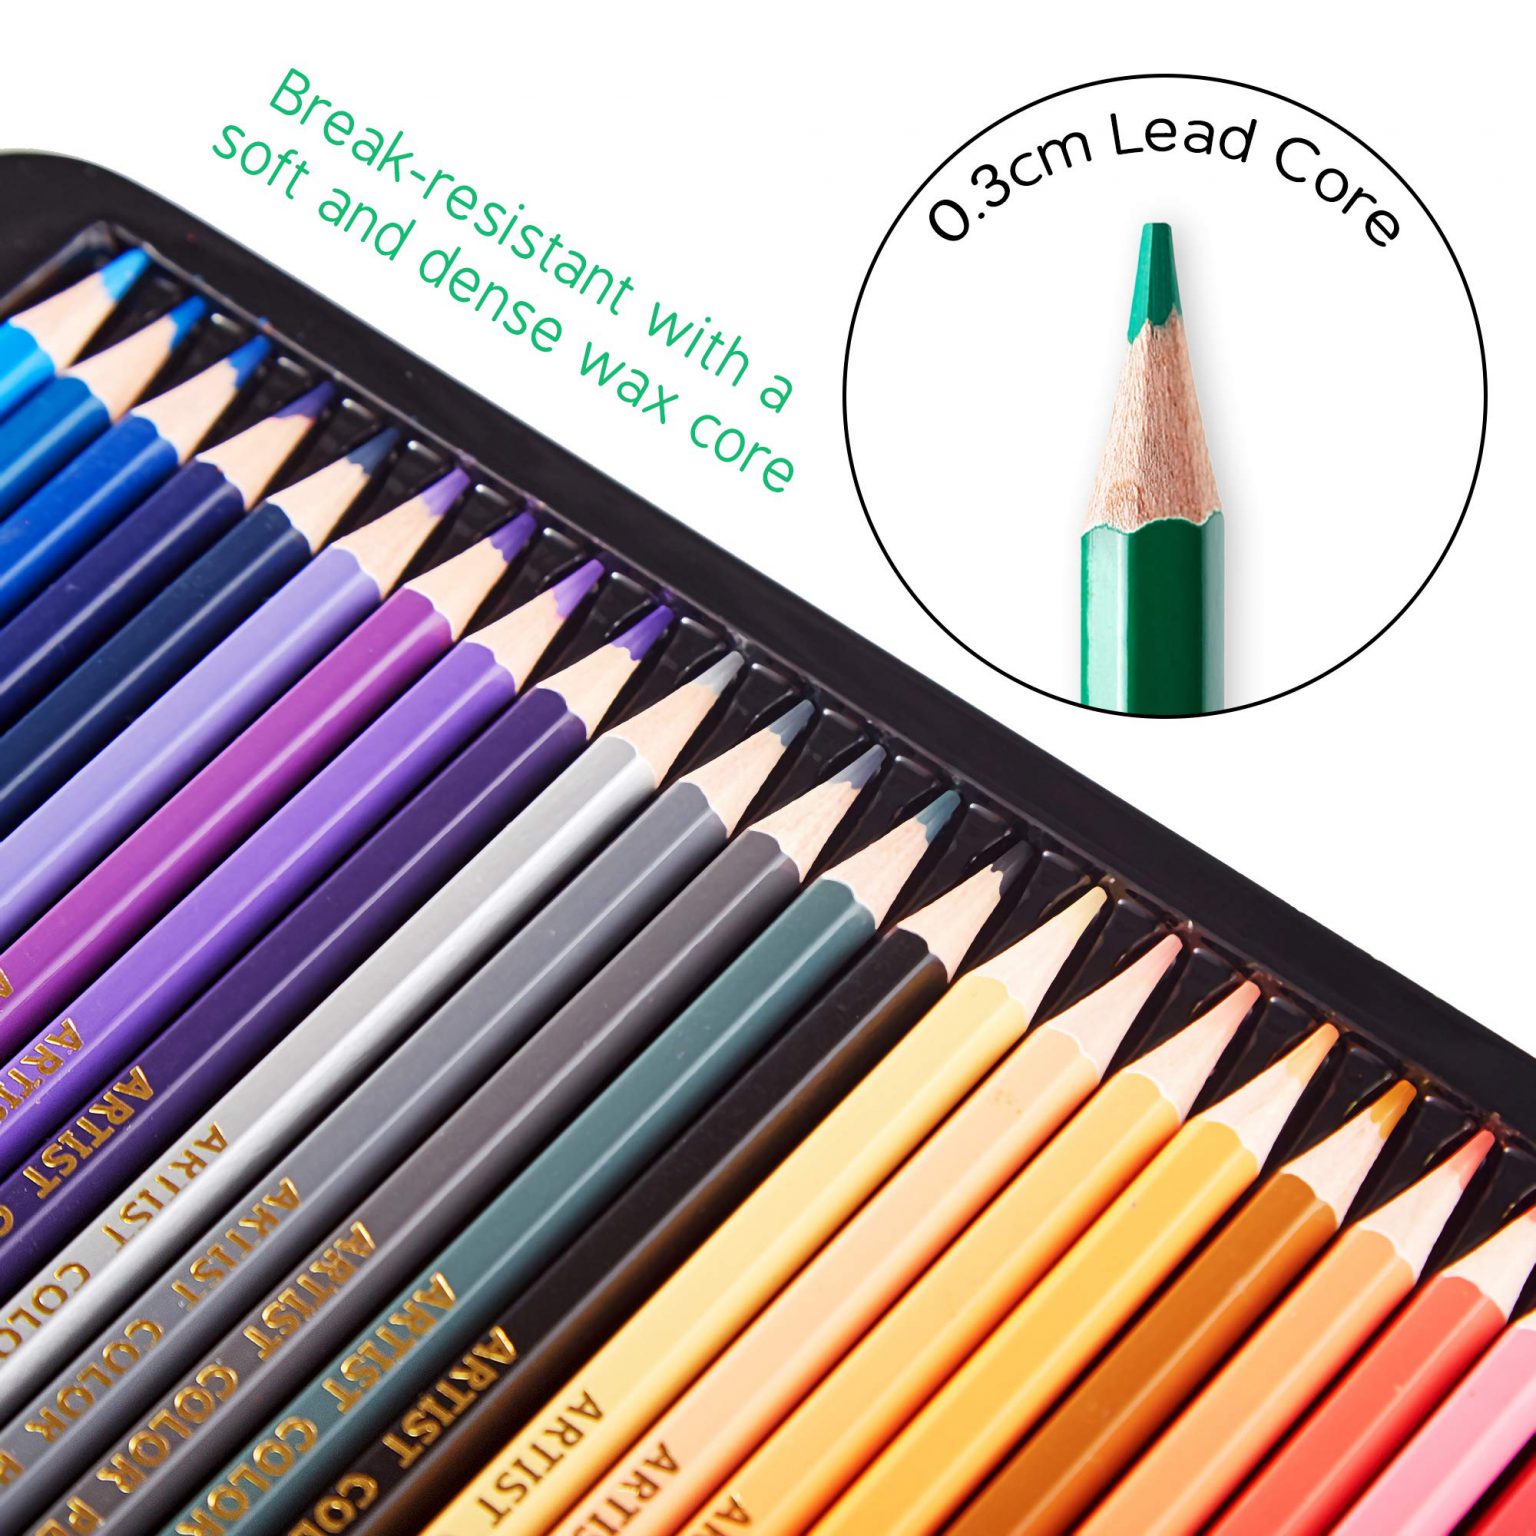 OOKU Professional Colored Pencils 120 Pc Studio Grade Artist Color